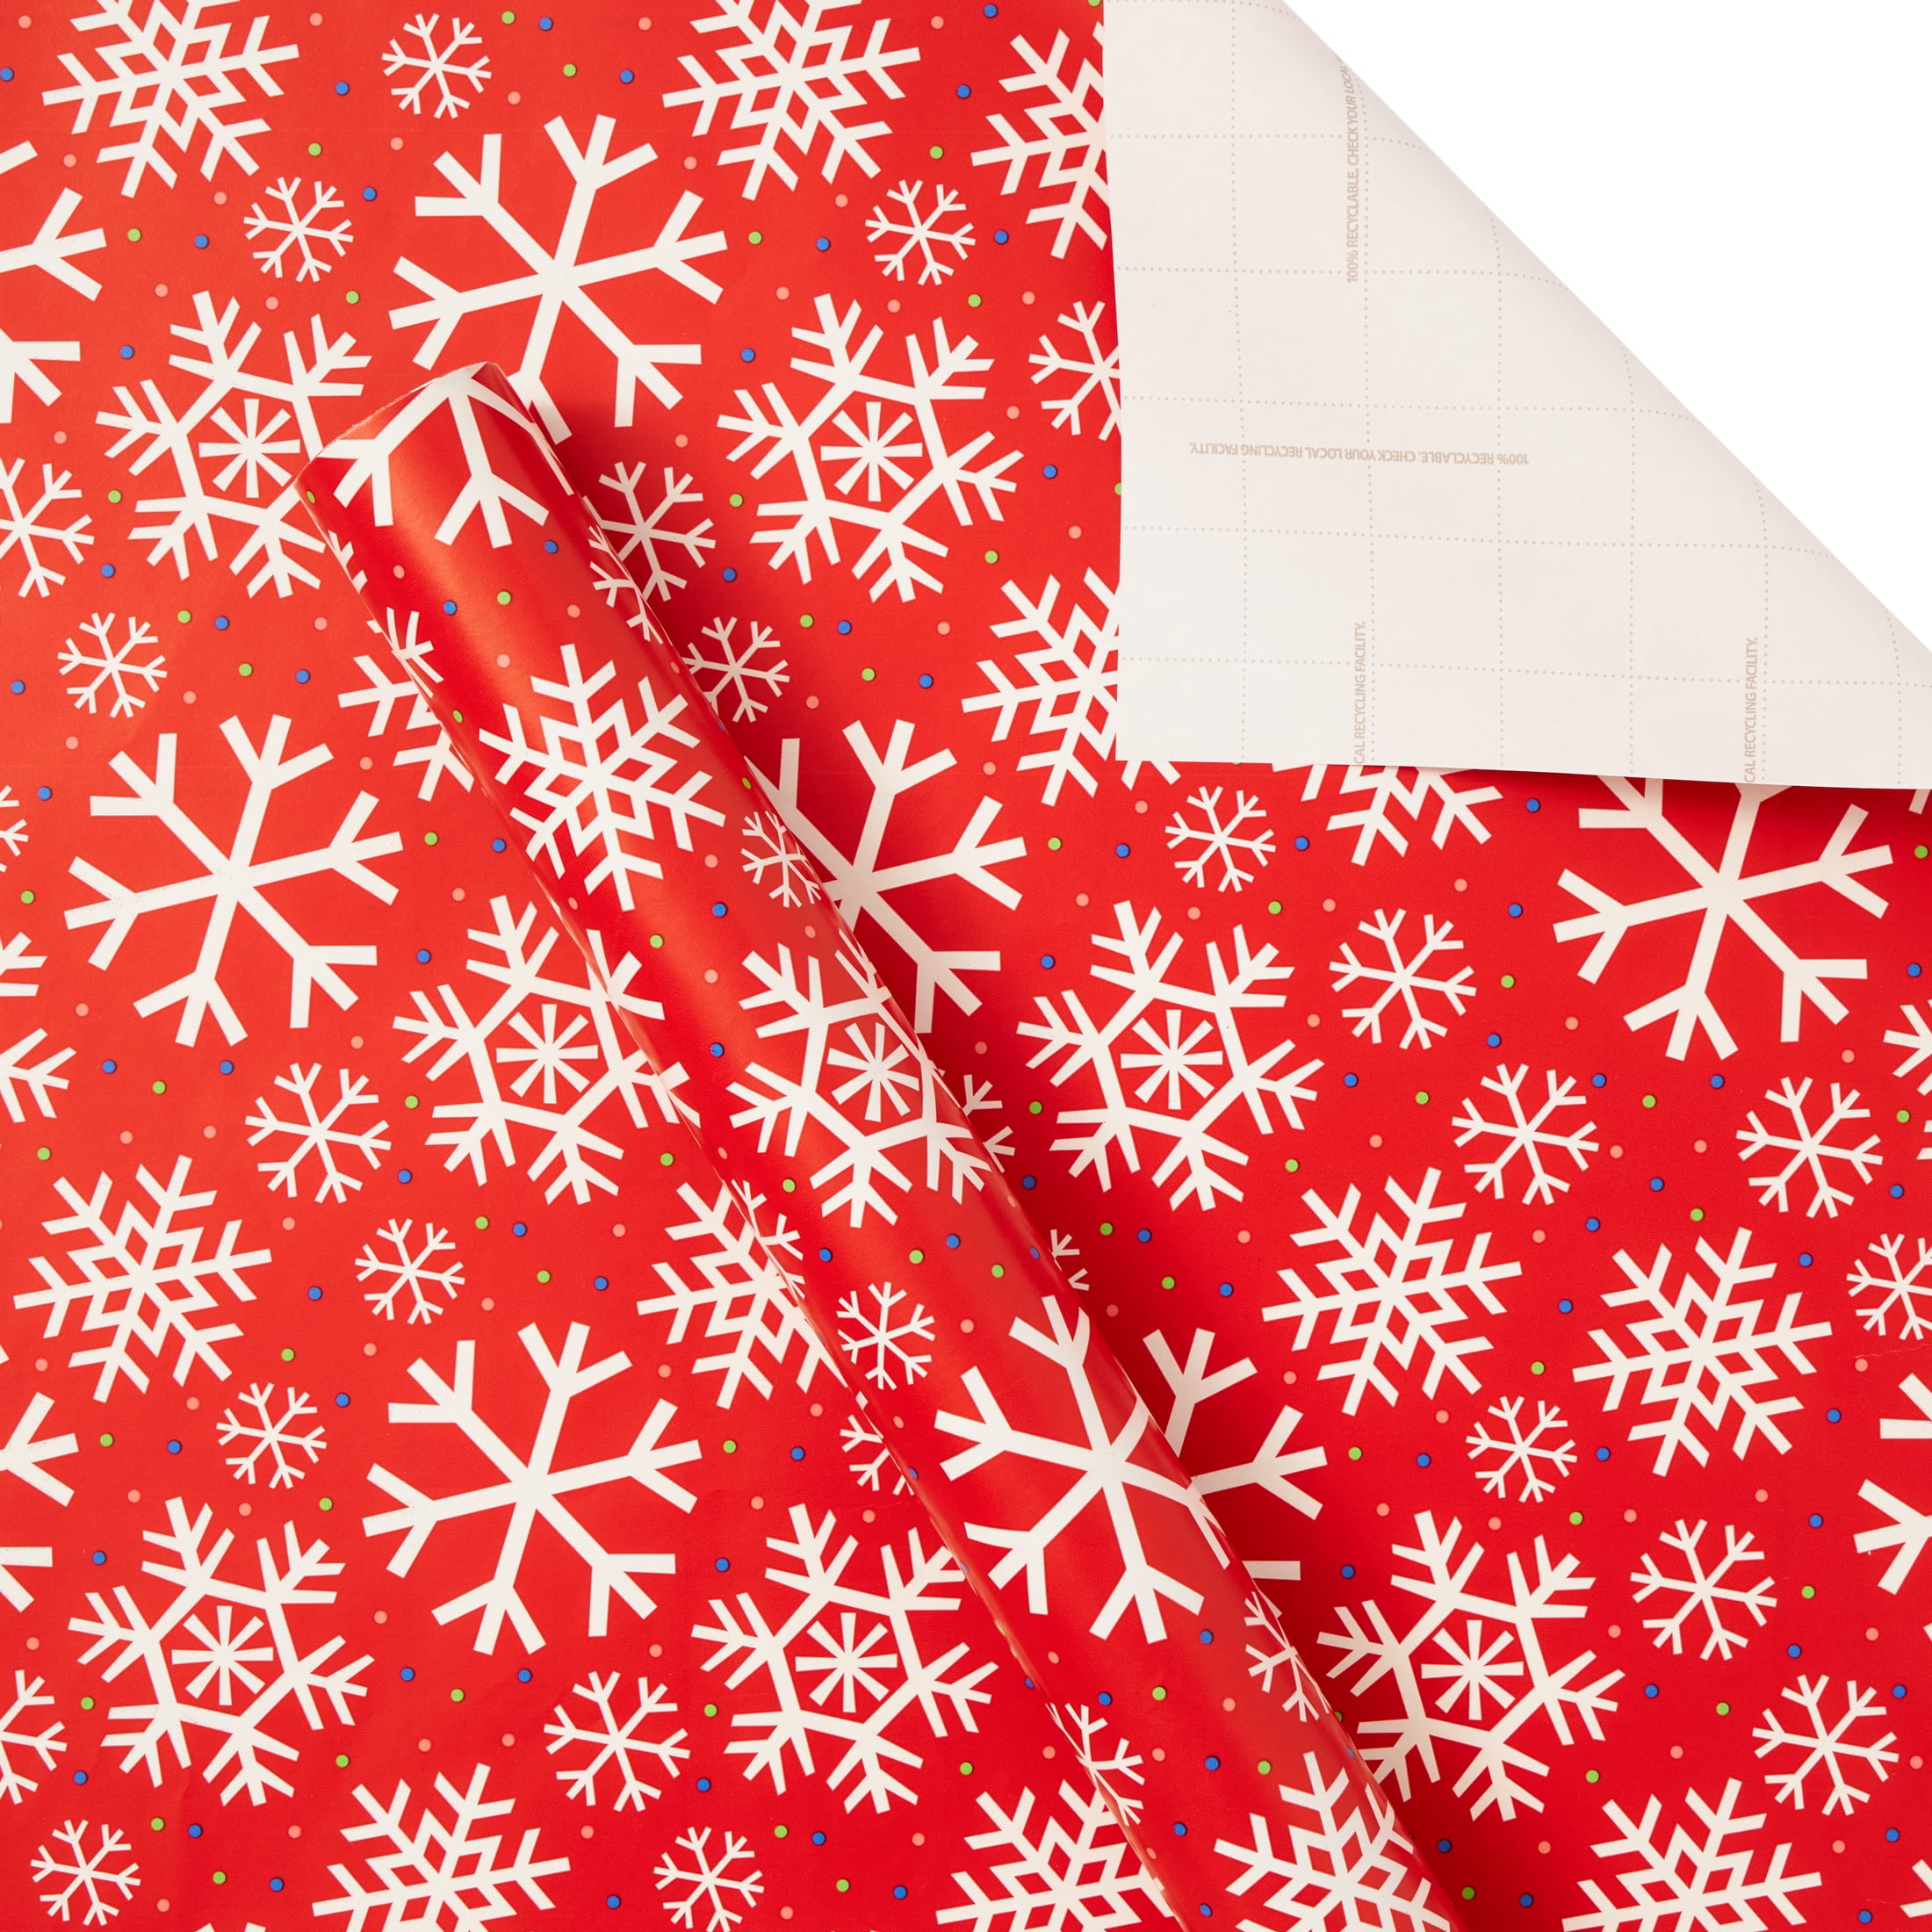  160 Pcs Christmas Wax Paper Sheets for Food Snowflake